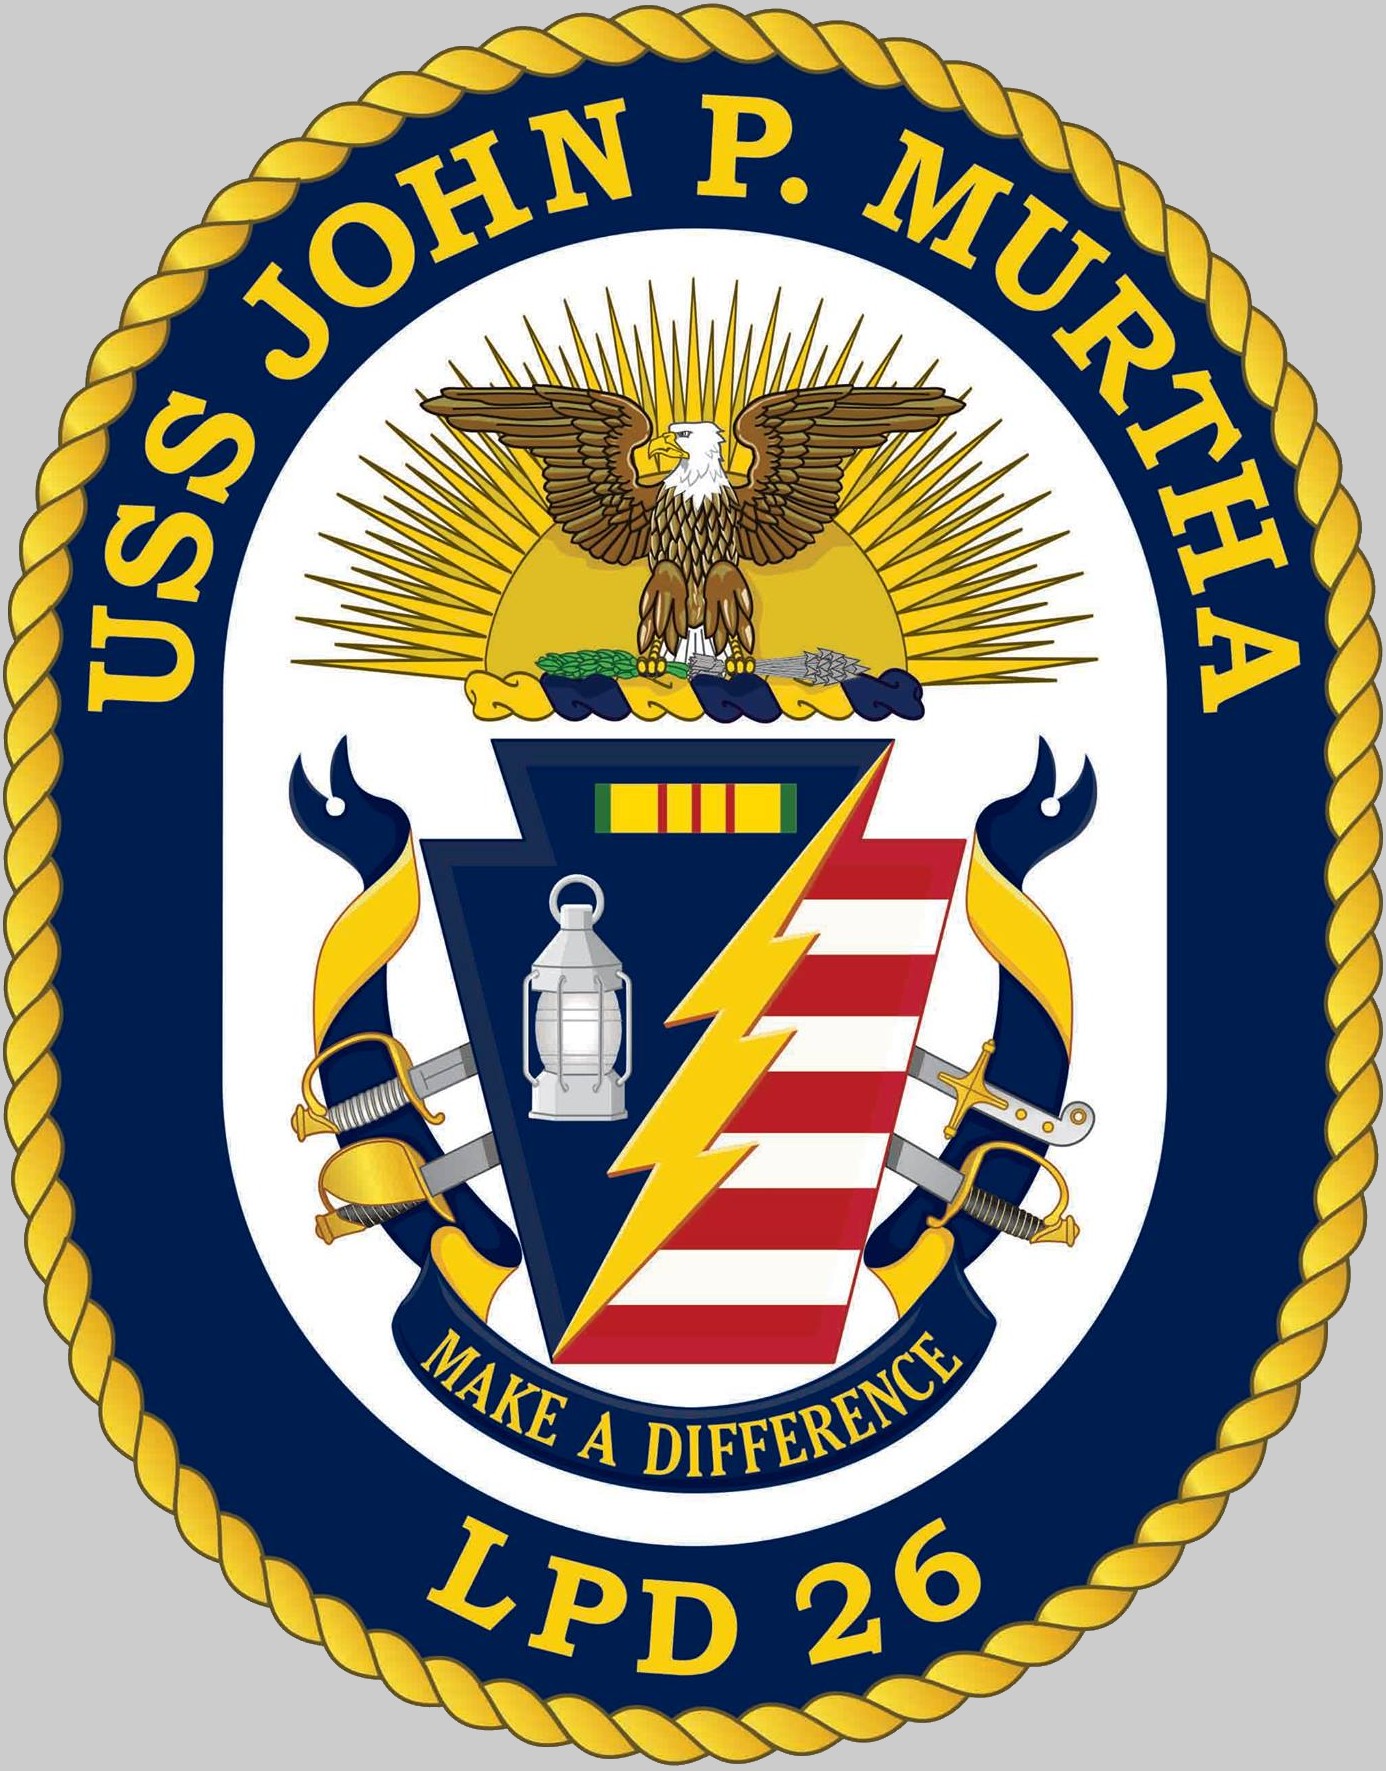 lpd-26 uss john p. murtha insignia crest patch badge amphibious transport dock ship navy 02x